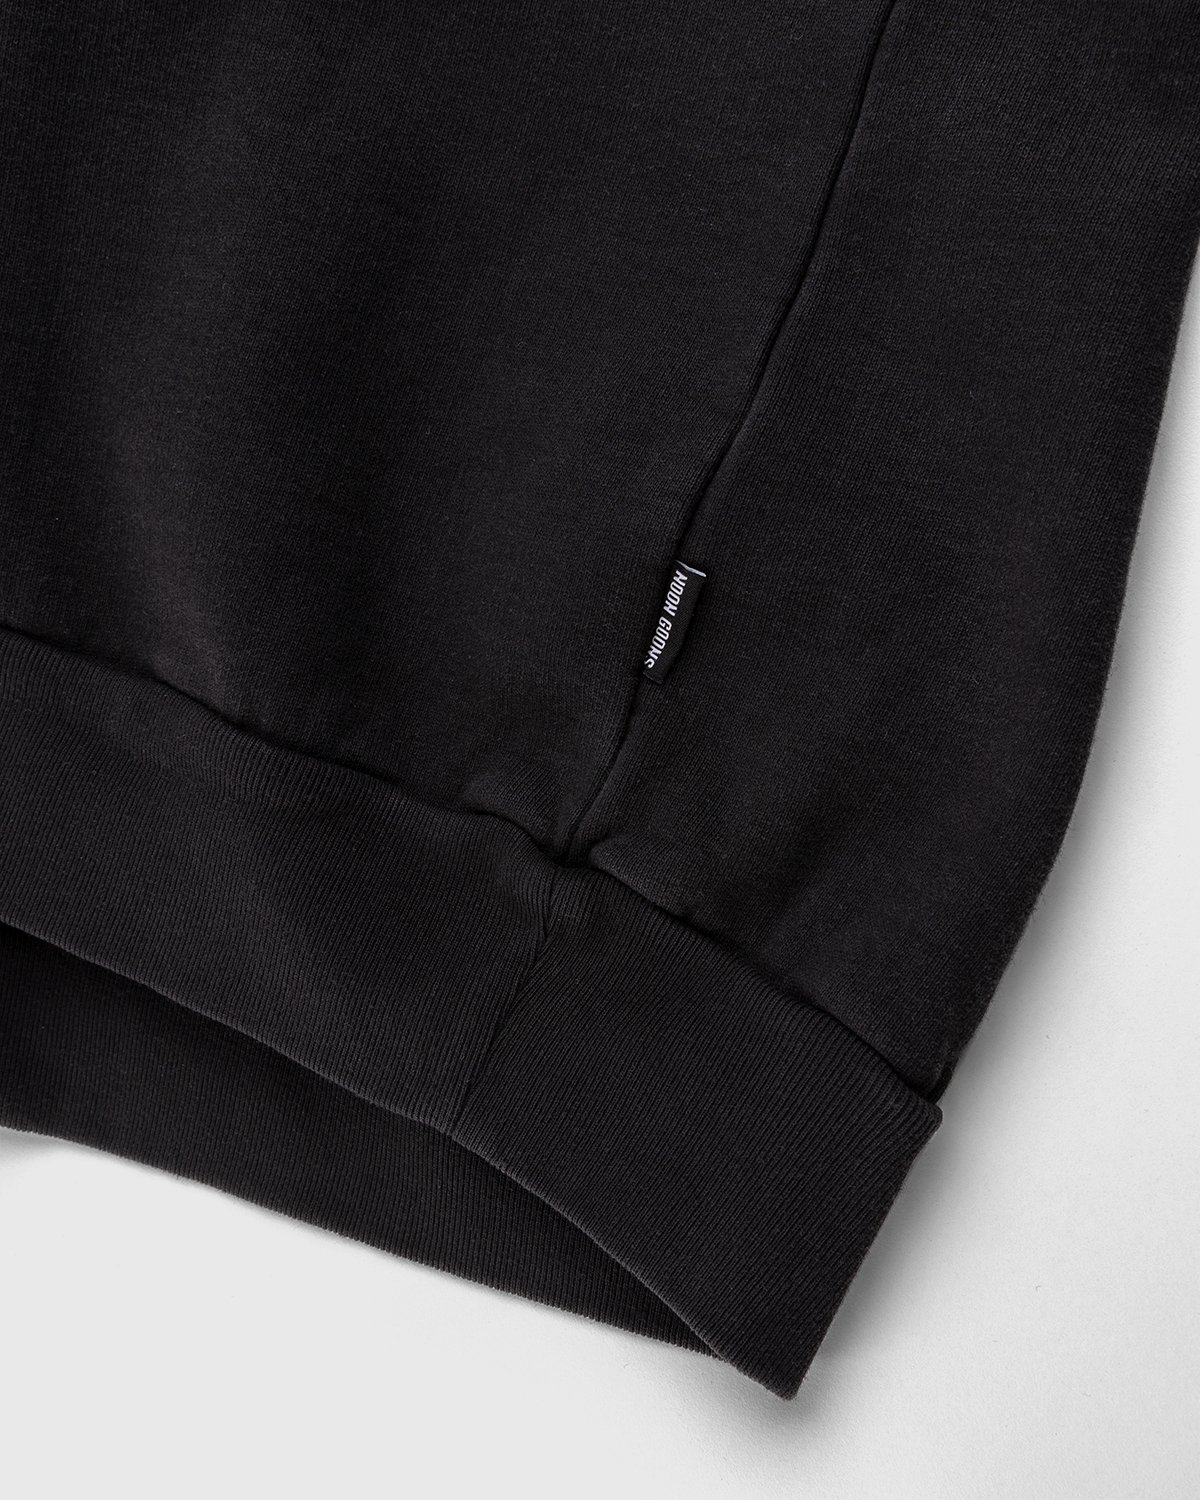 Noon Goons - Garden Sweatshirt Black - Clothing - Black - Image 4